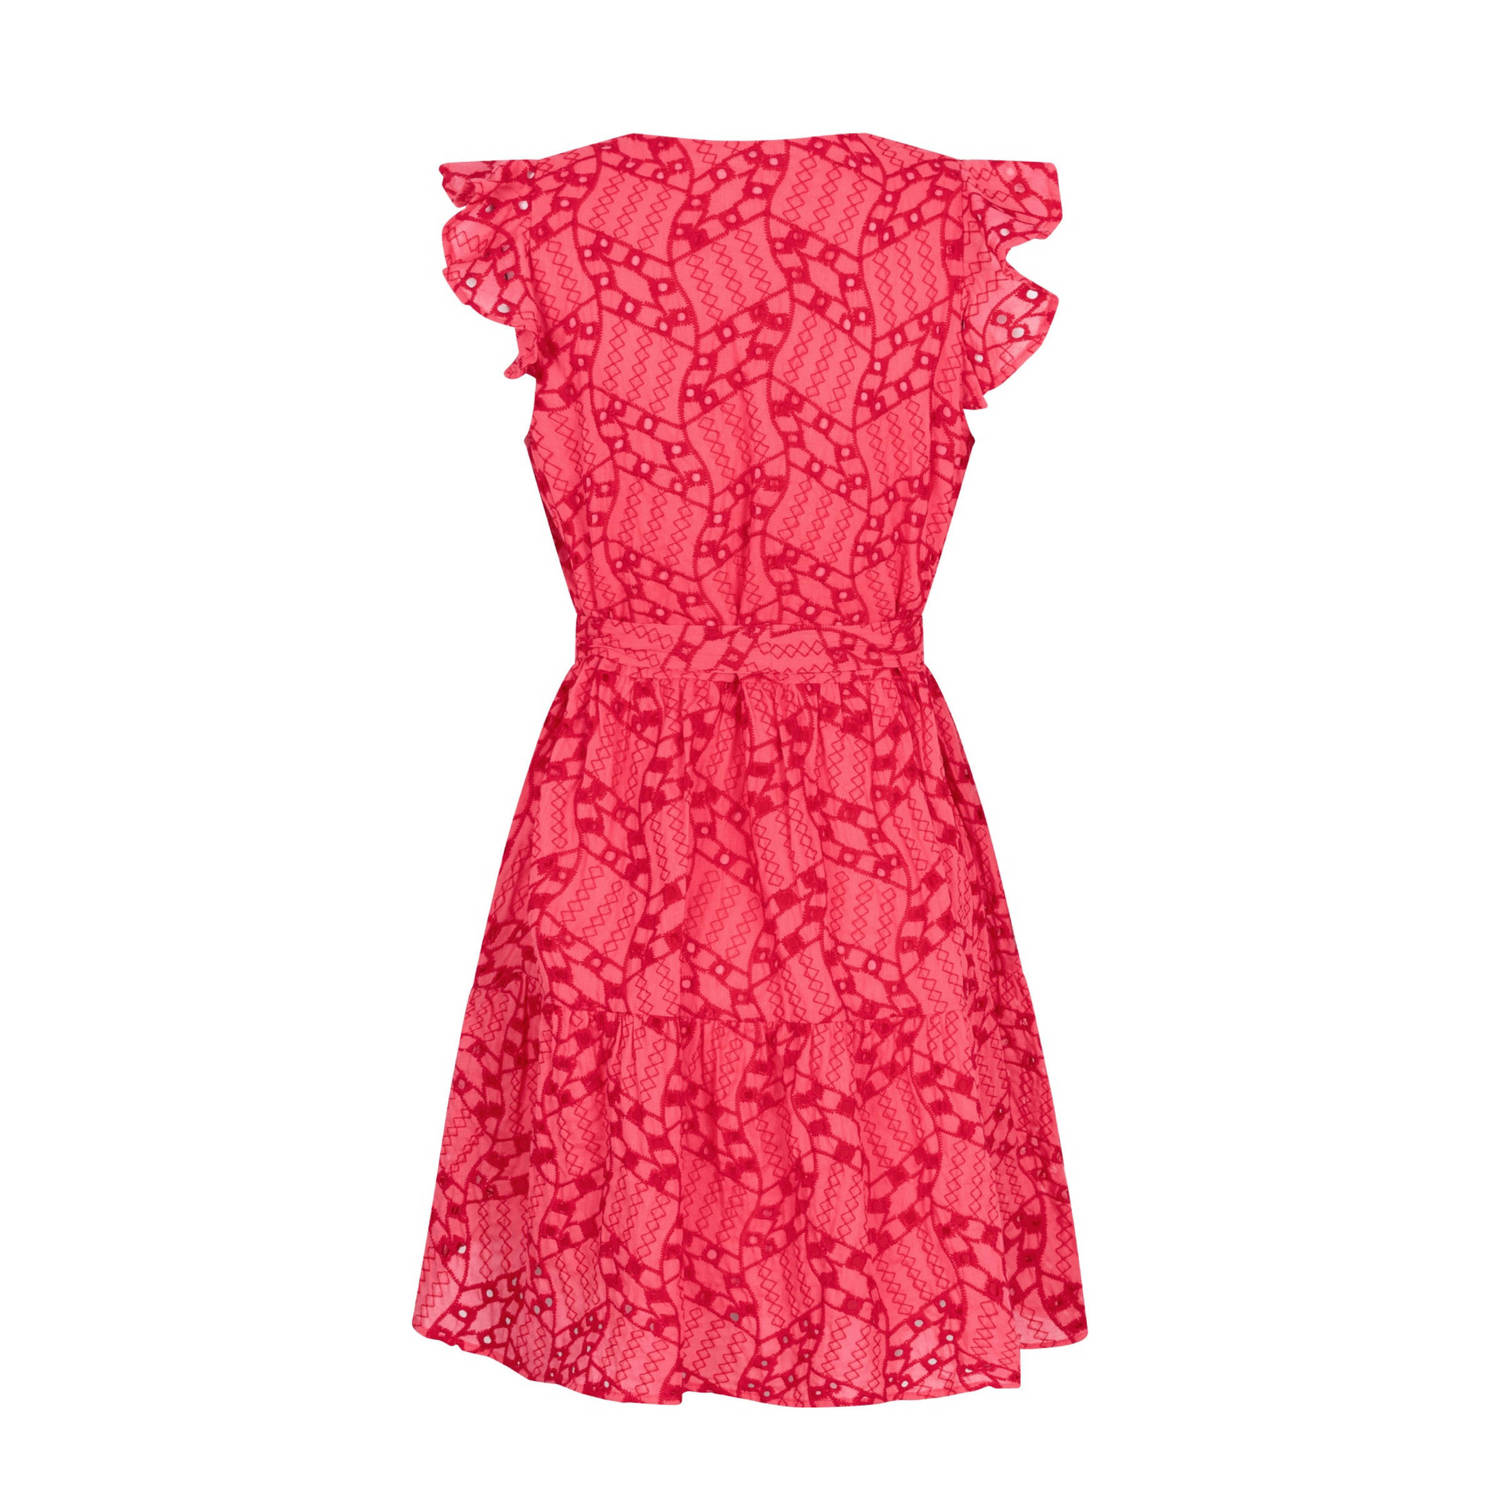 Ydence jurk Adeline met all over print en borduursels roze rood